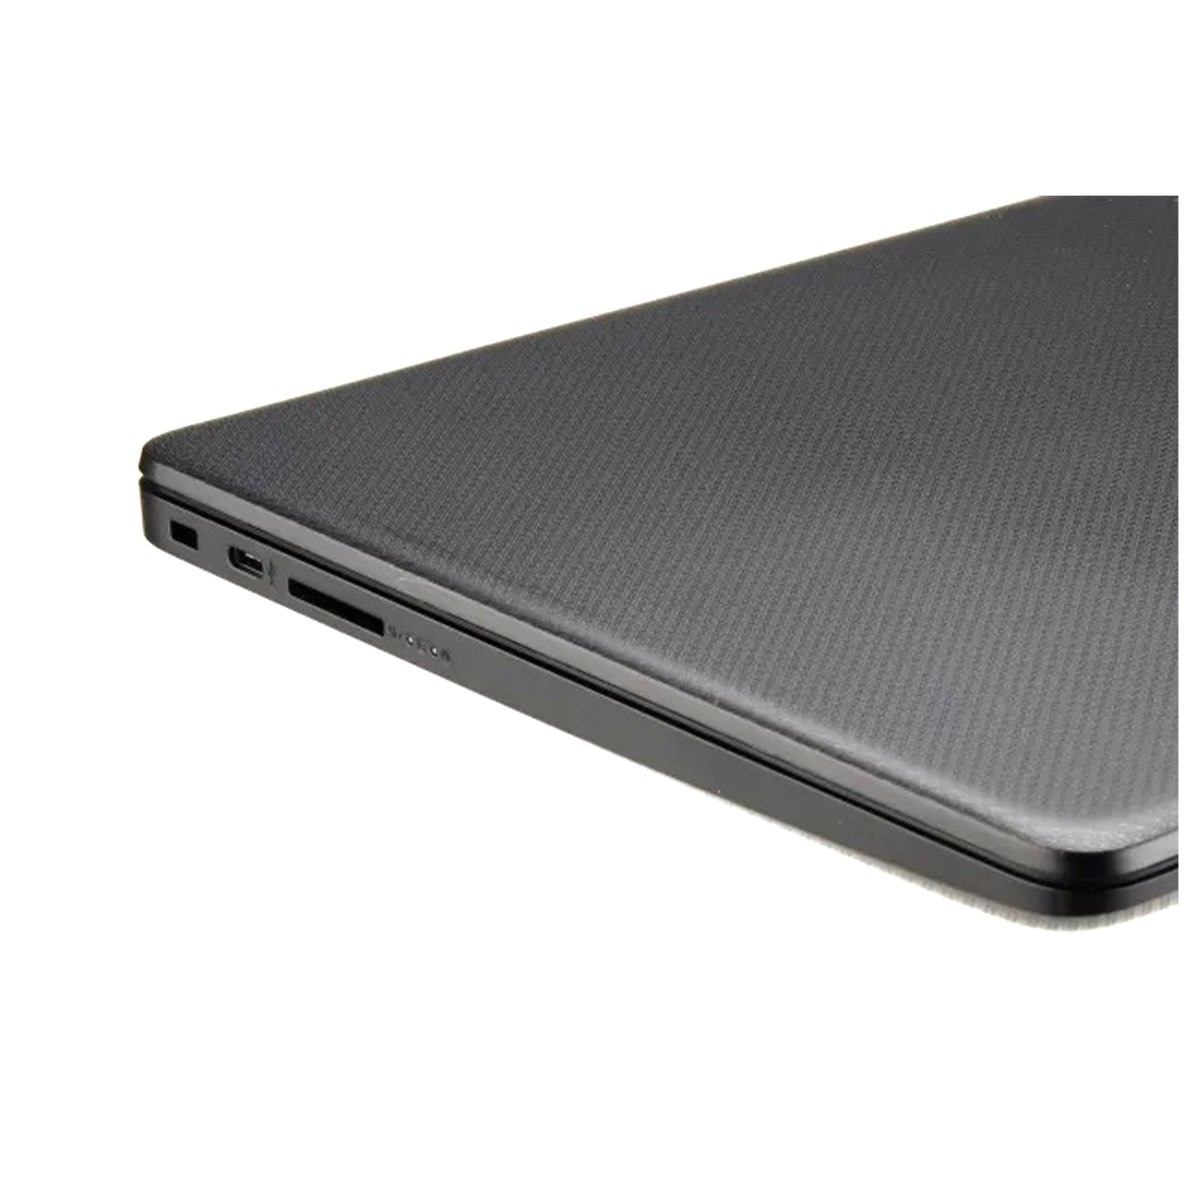 HP Notebook 14-DK1013DX AMD,128GB SSD,4GB RAM,Shared Graphics,14" HD LED,Windows 10s, English Keyboard